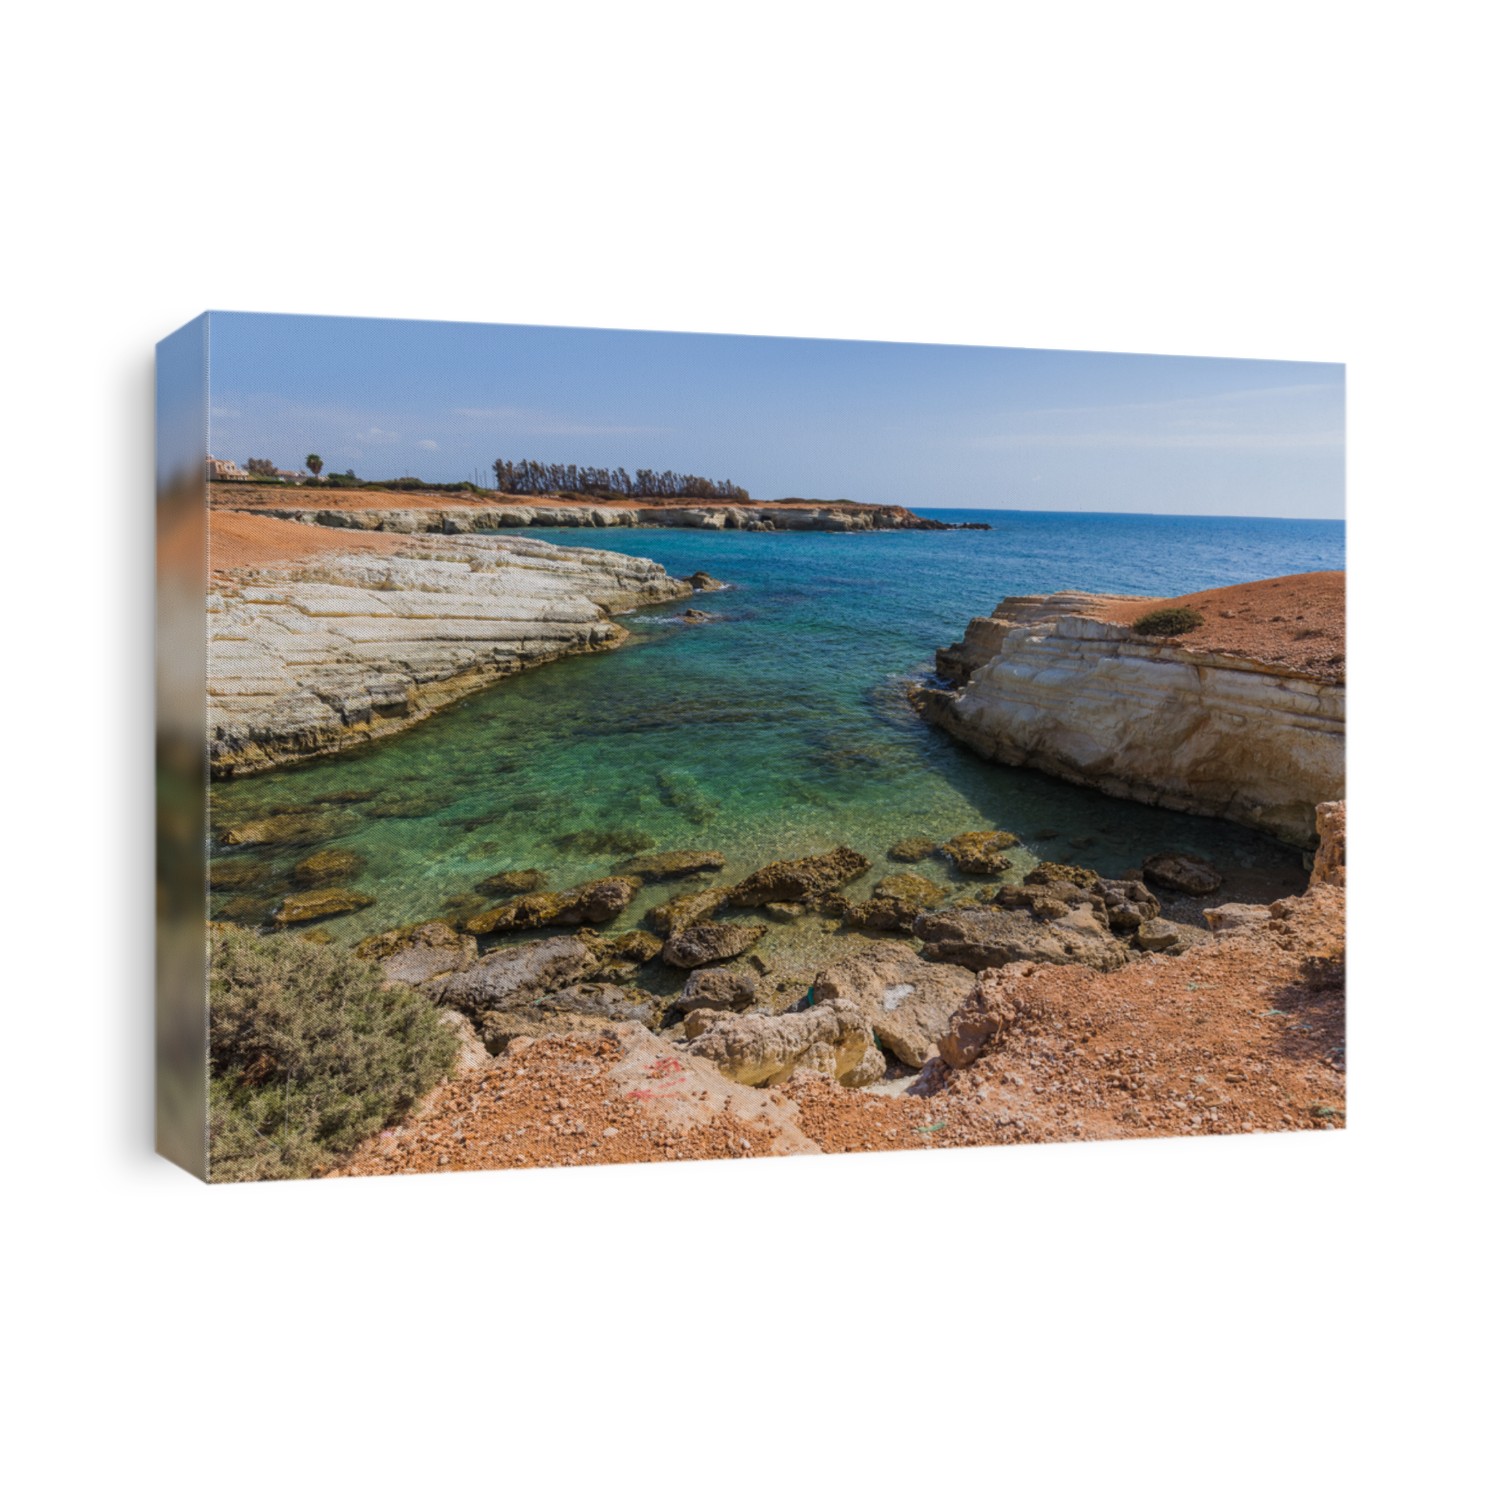 Beach on Cyprus island - travel background